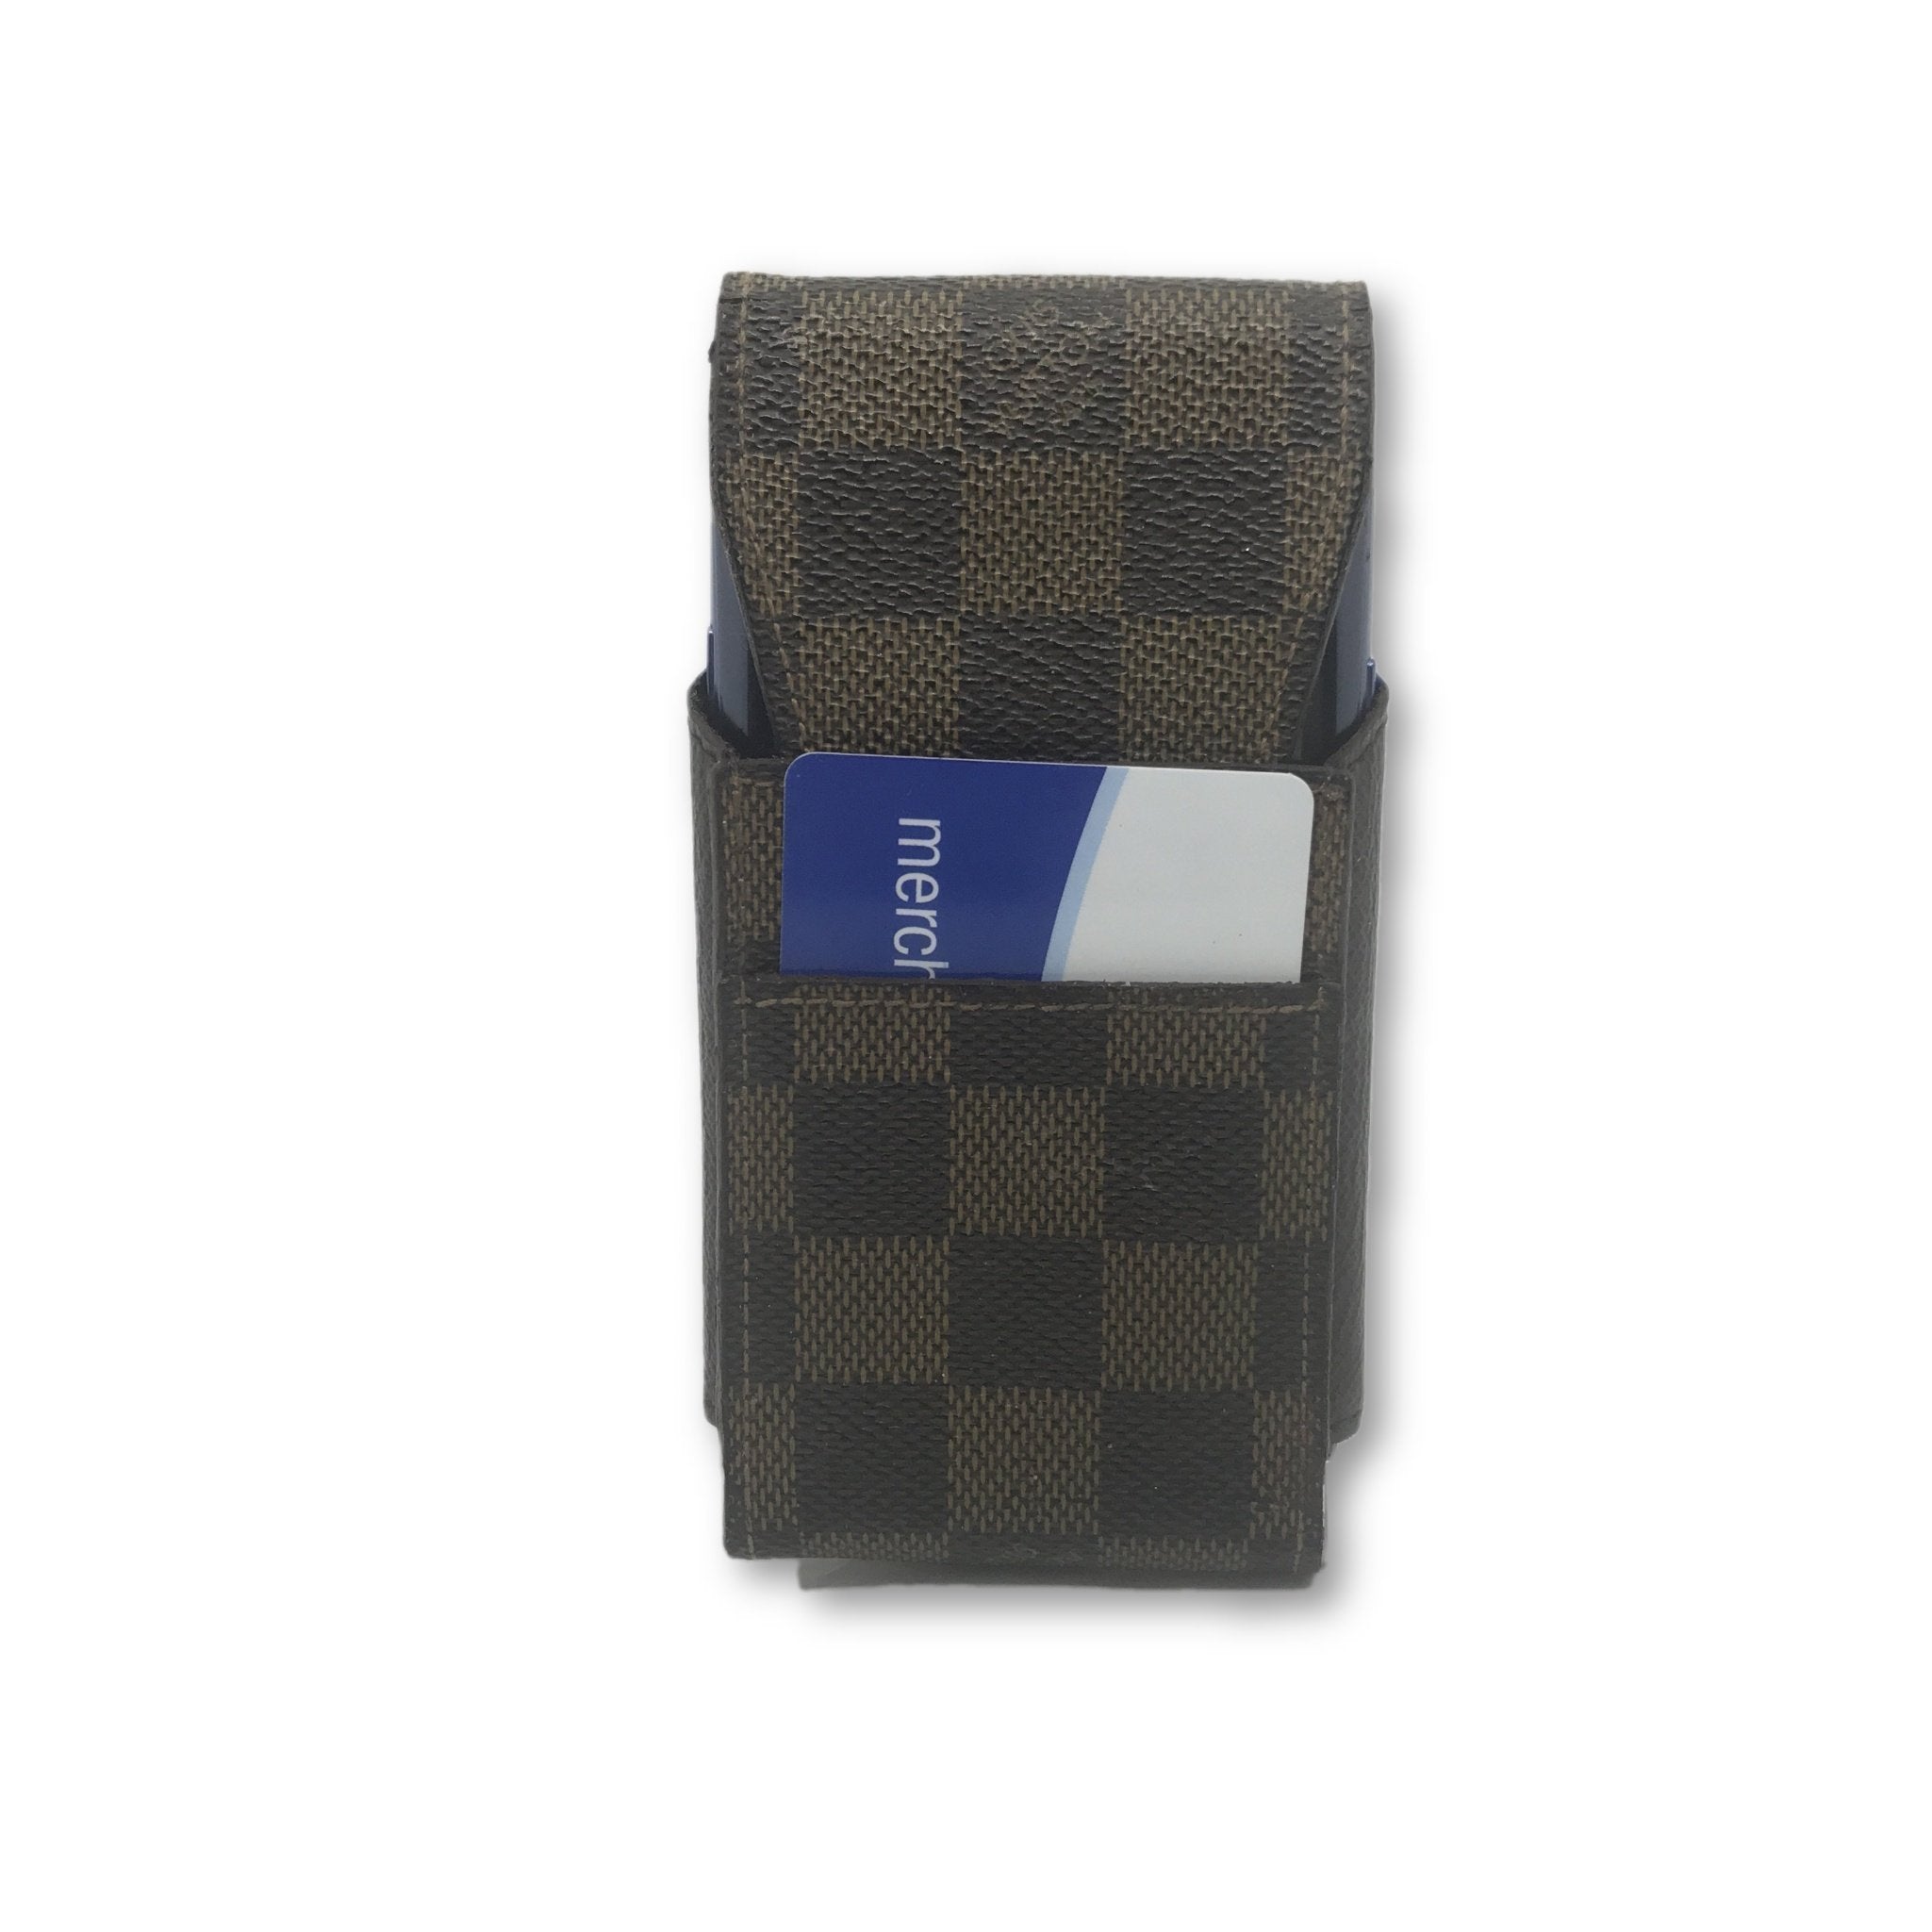 Authentic Louis Vuitton Damier Ebene IPhone Case Holder: Phone, Cards,  Cash, – Just Gorgeous Studio